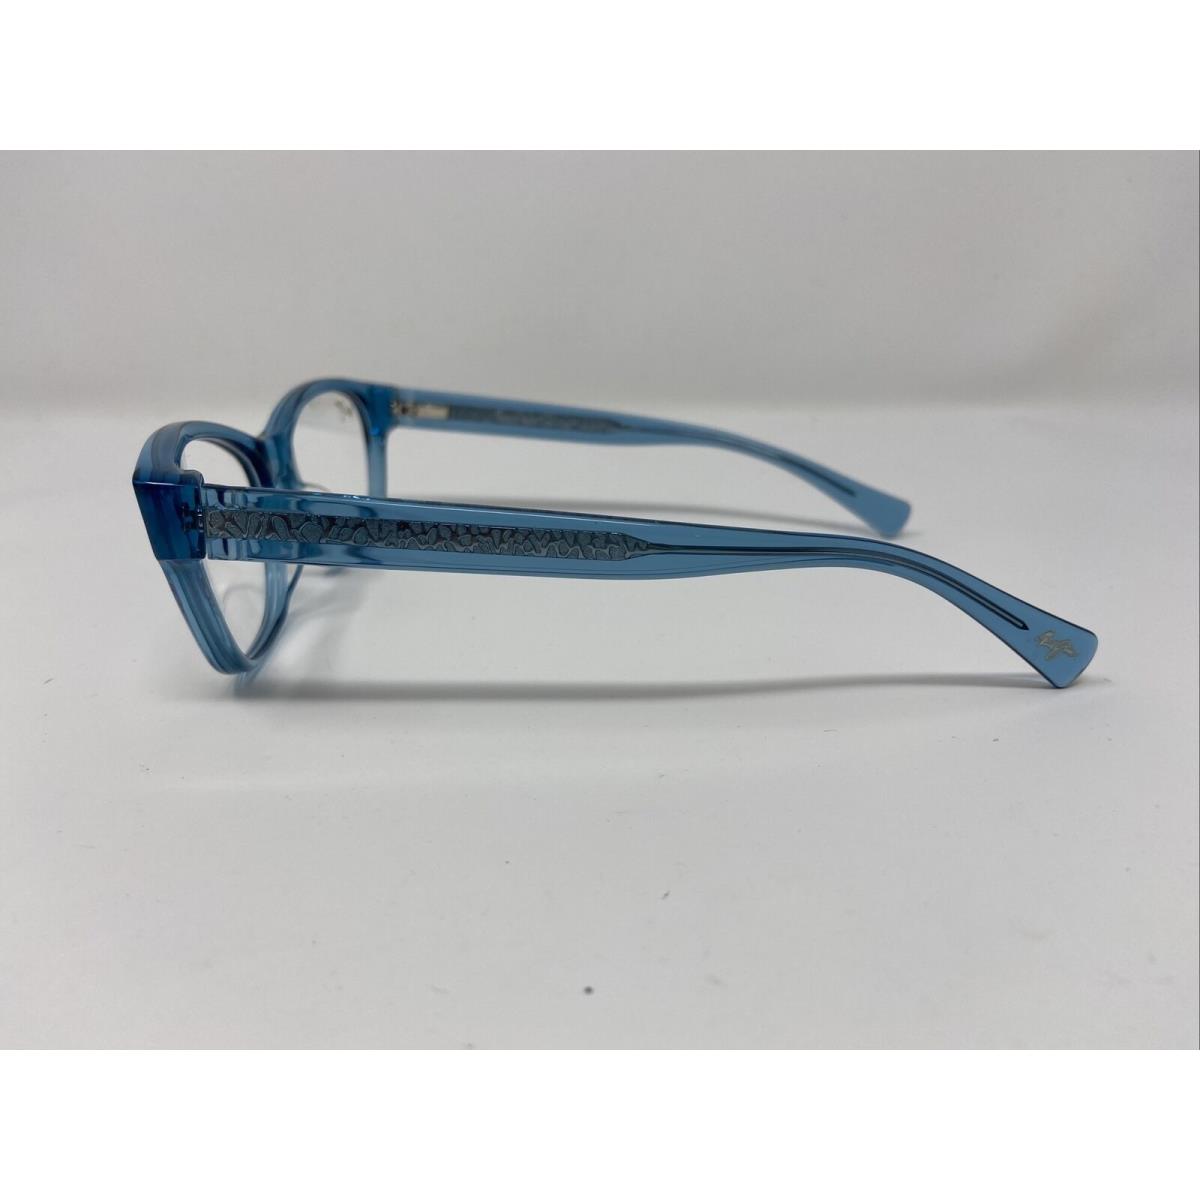 Maui Jim eyeglasses  - Blue Frame 1